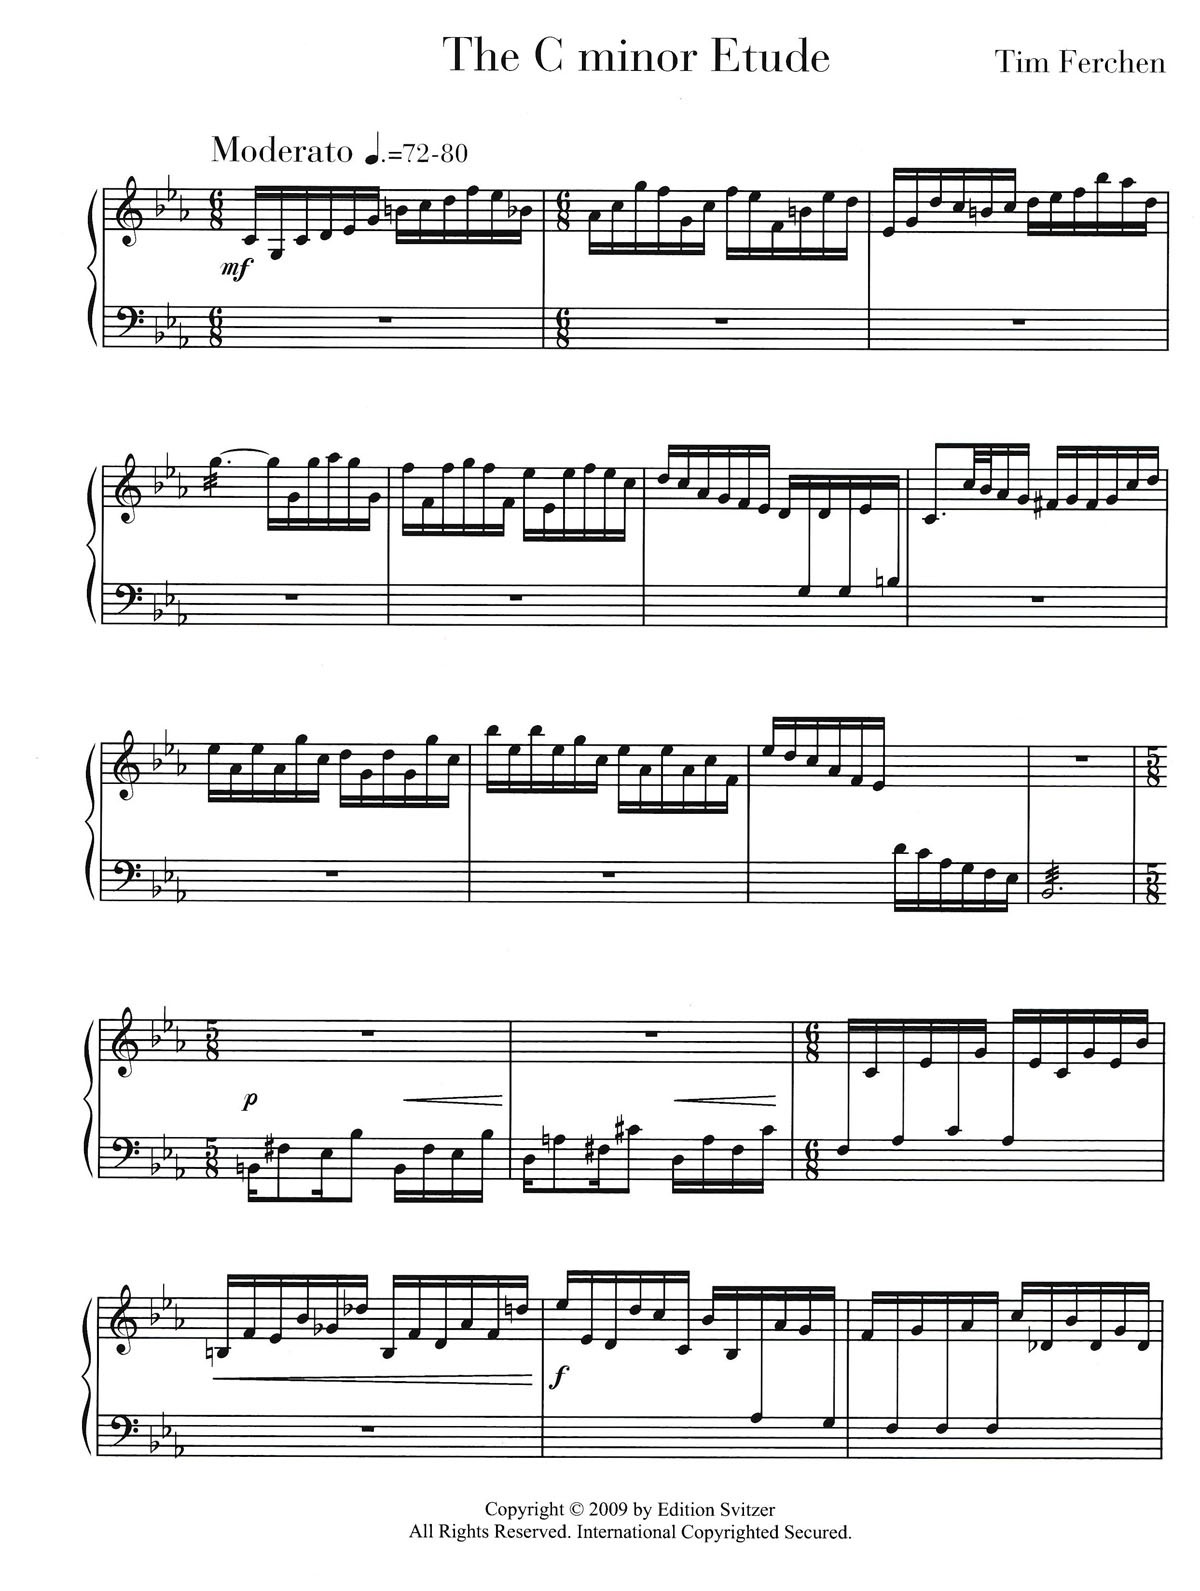 Etudes for Marimba Vol. 1 by Tim Ferchen